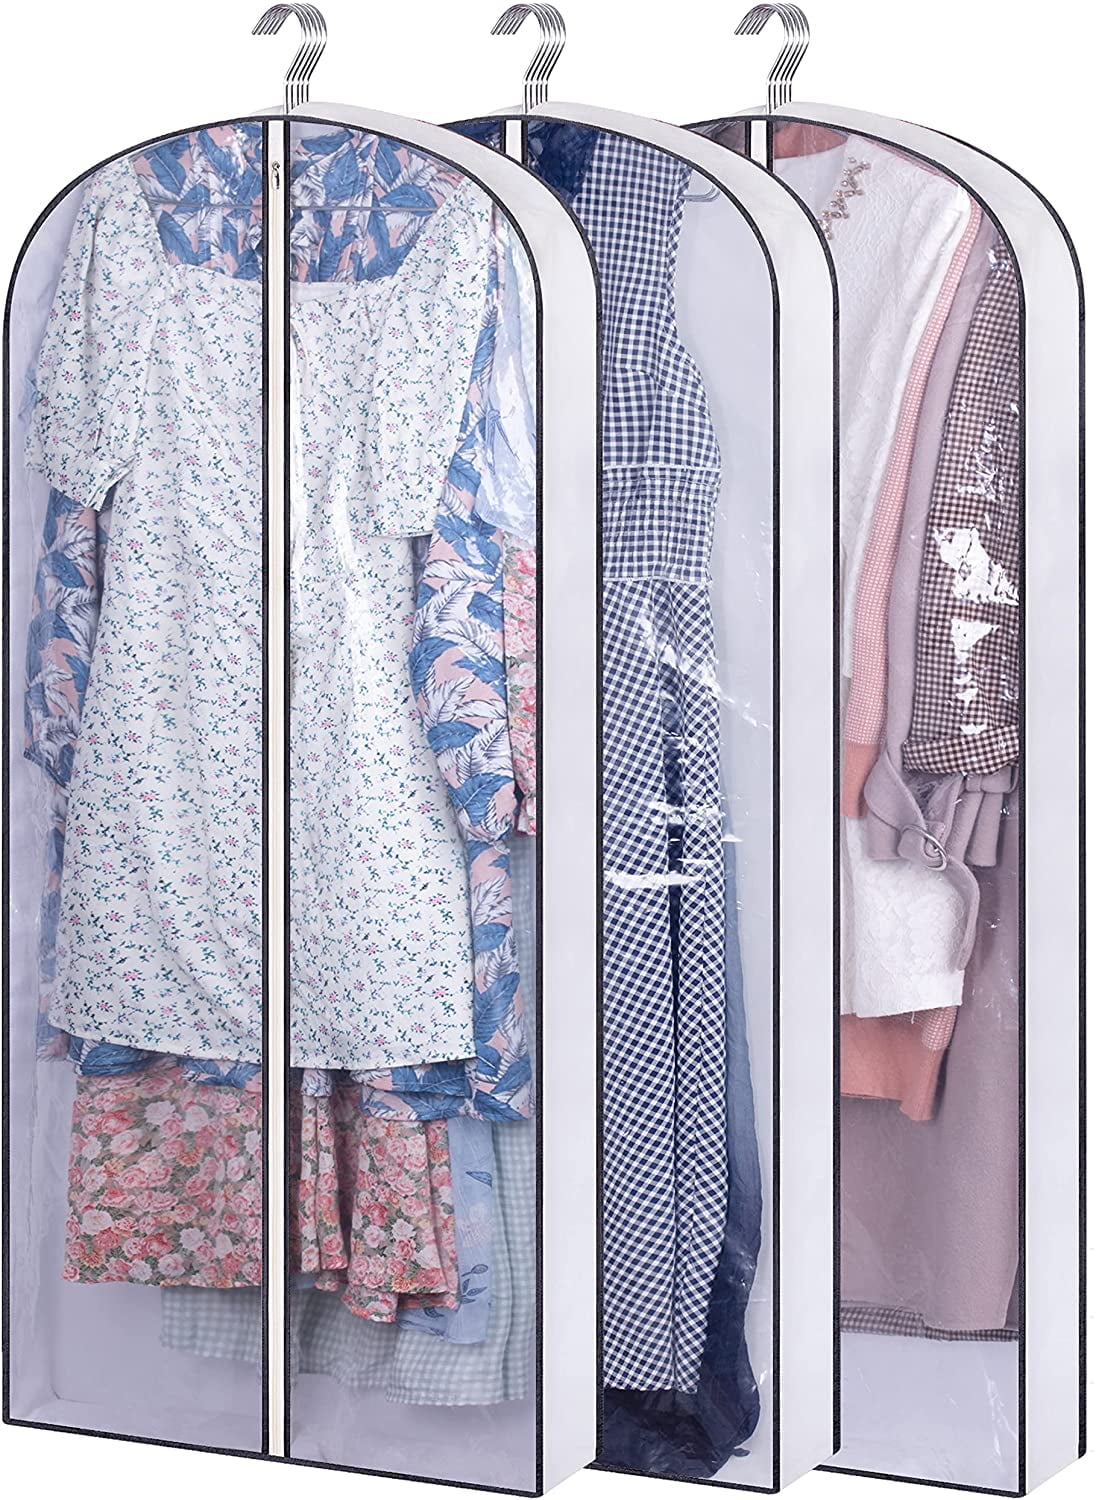 medium 50 Coat Hanger Size Cubes Clear Garment Clothes Markers New SIZE M 